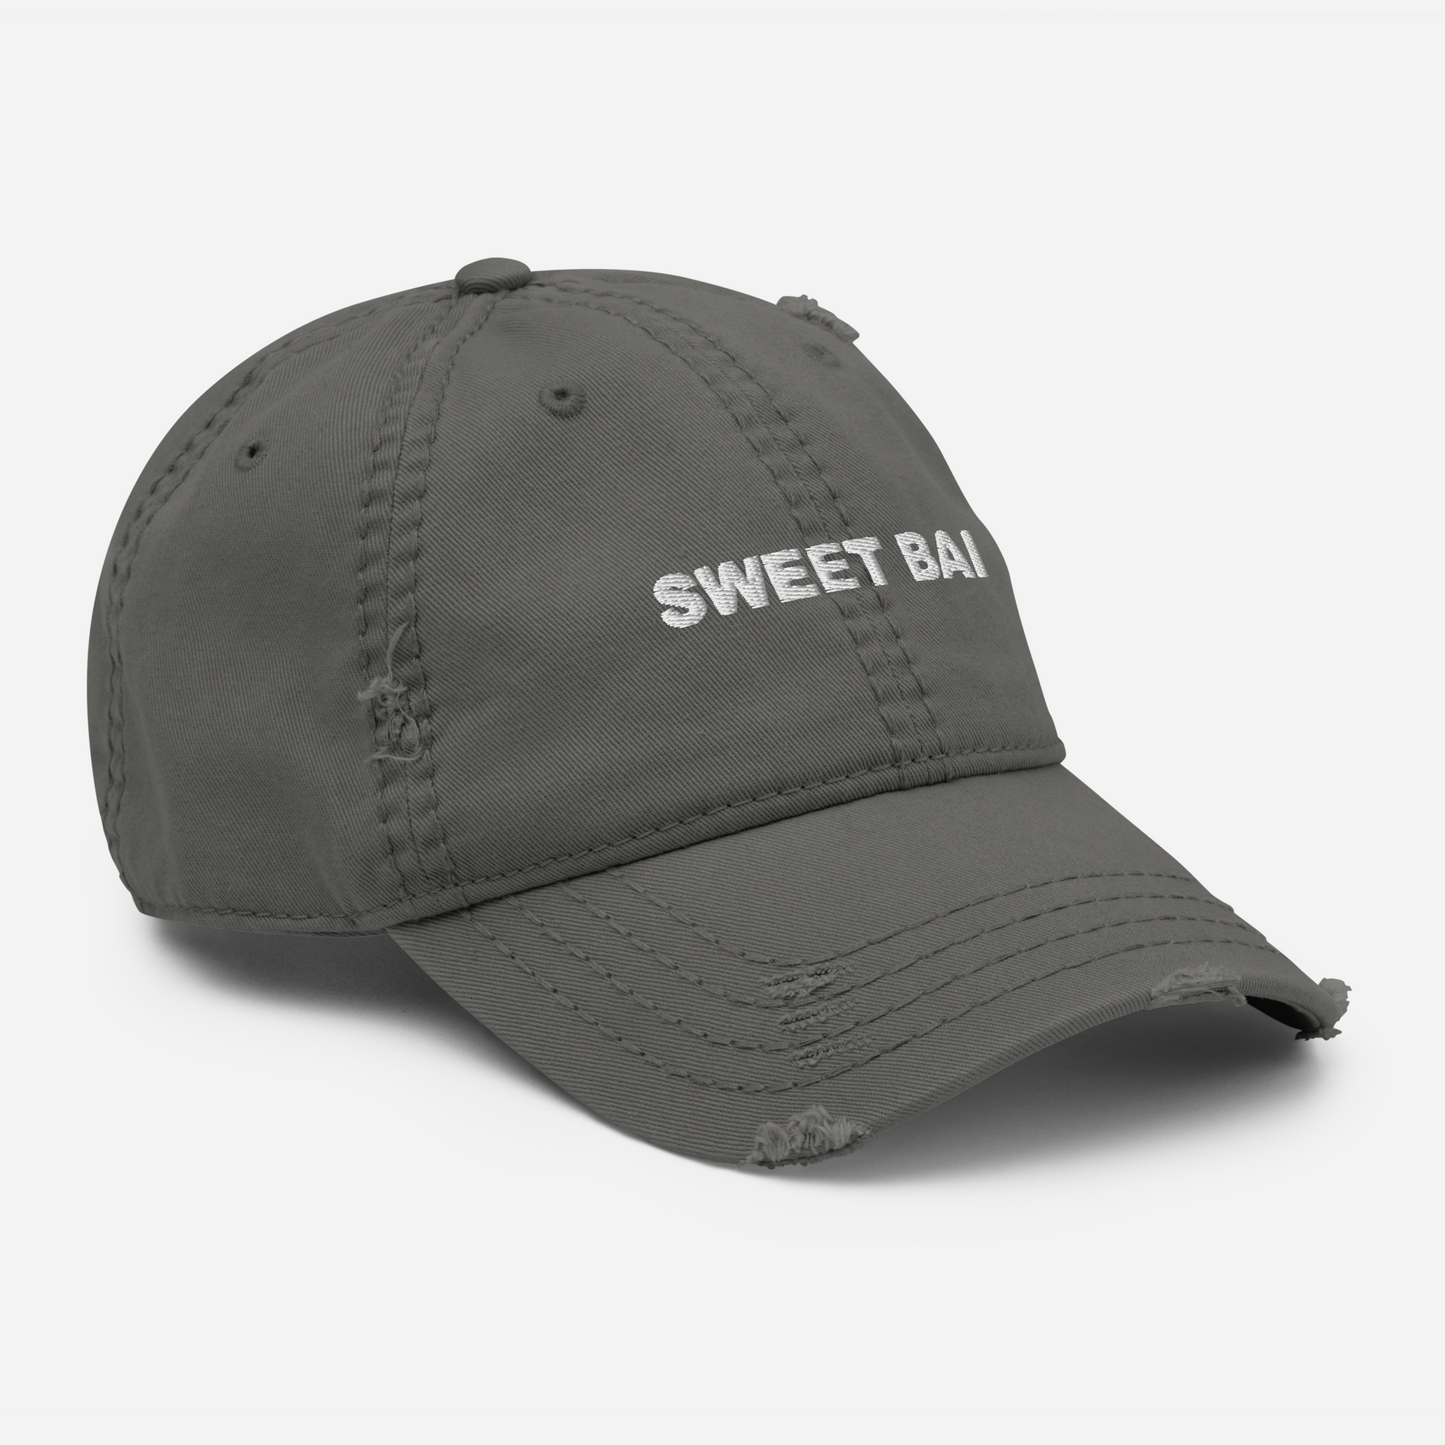 Sweet Bai Distressed Dad Hat